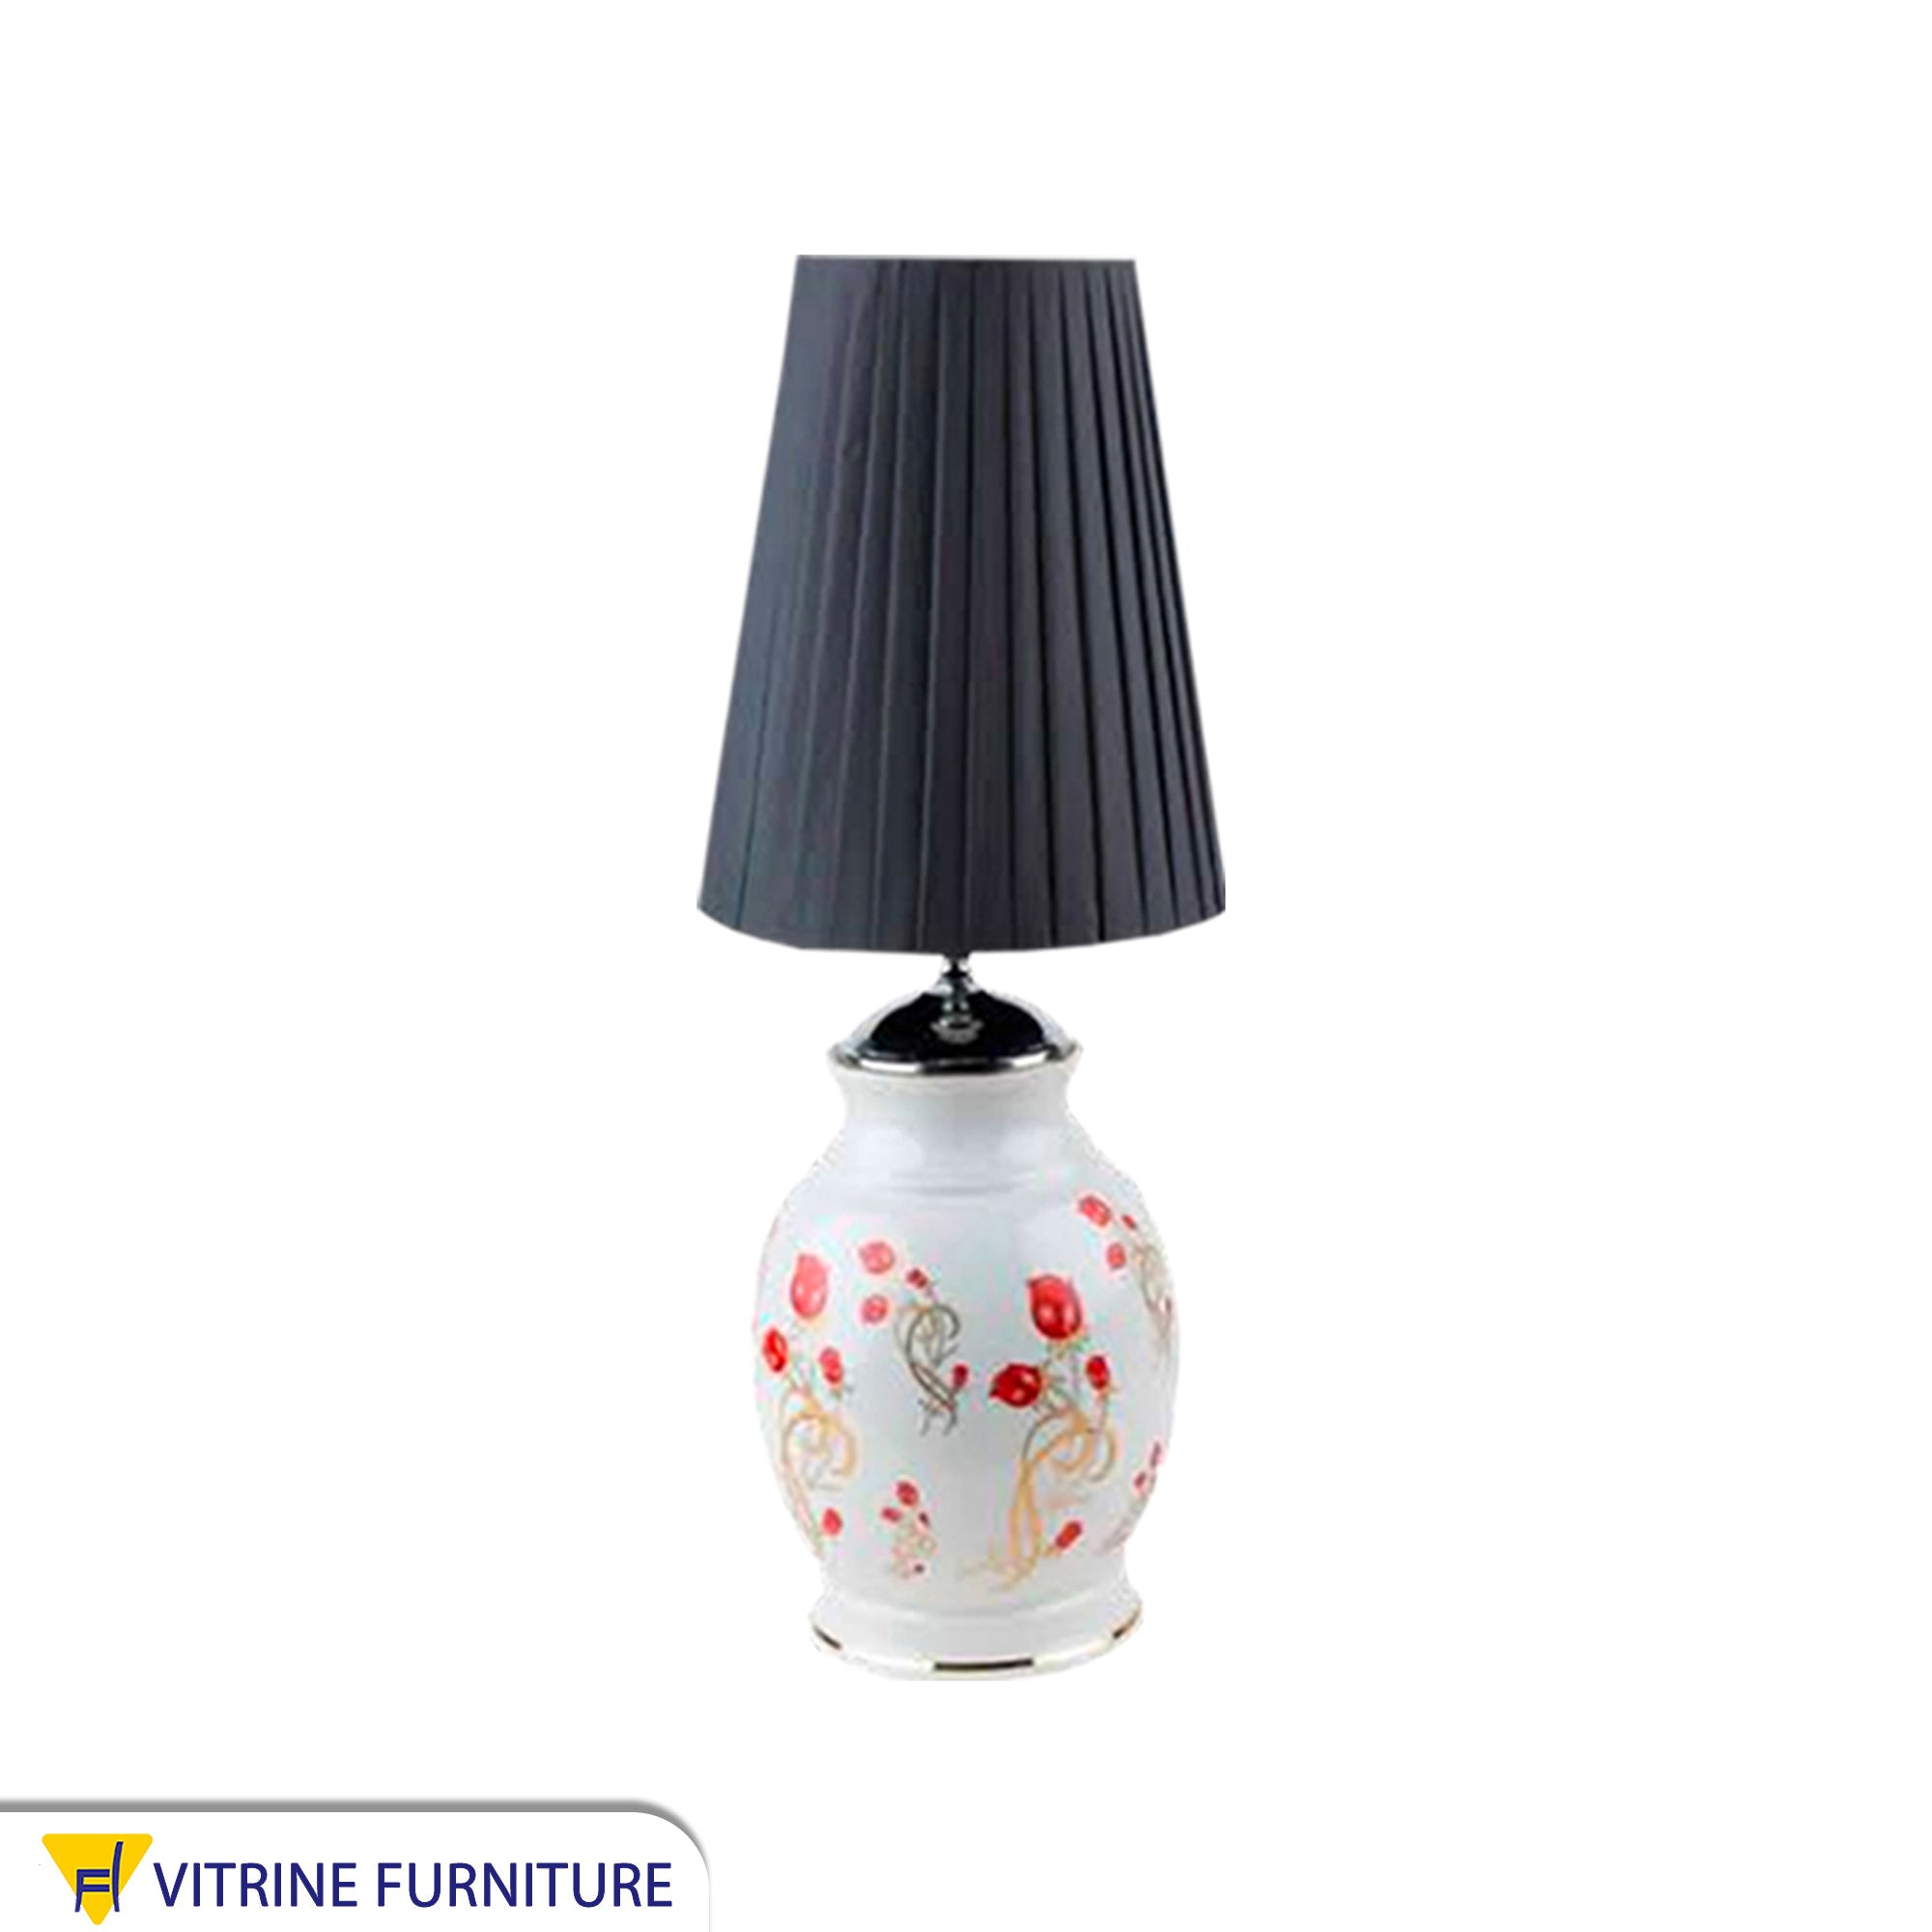 Sultan vase table lamp